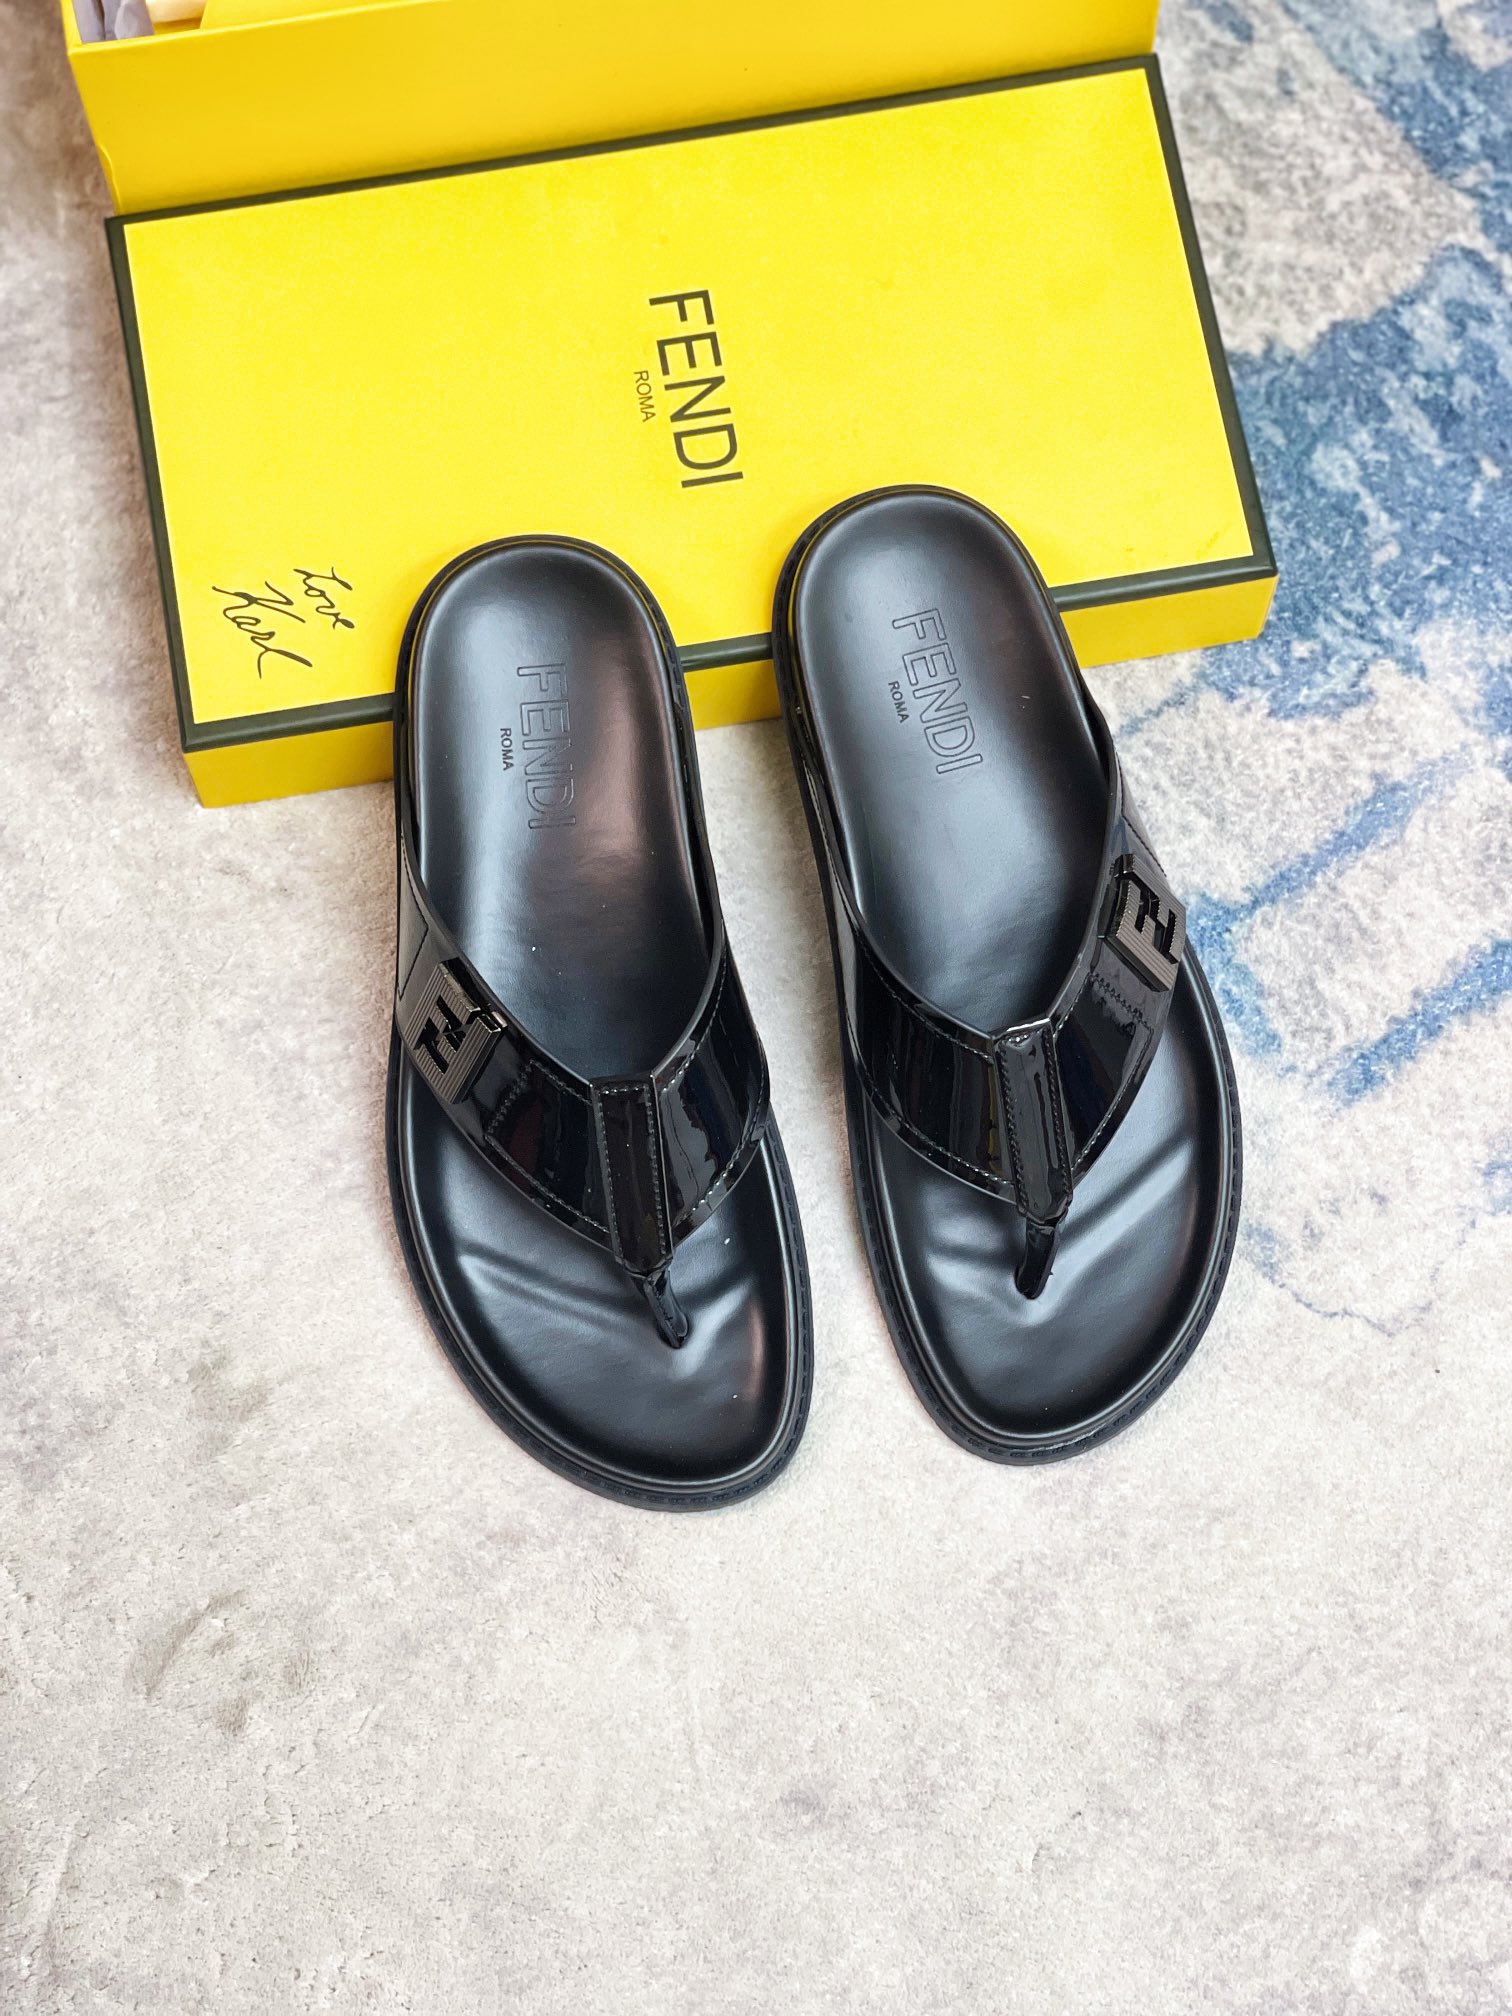 Fendi Shoes Slippers Men Calfskin Cowhide Summer Collection